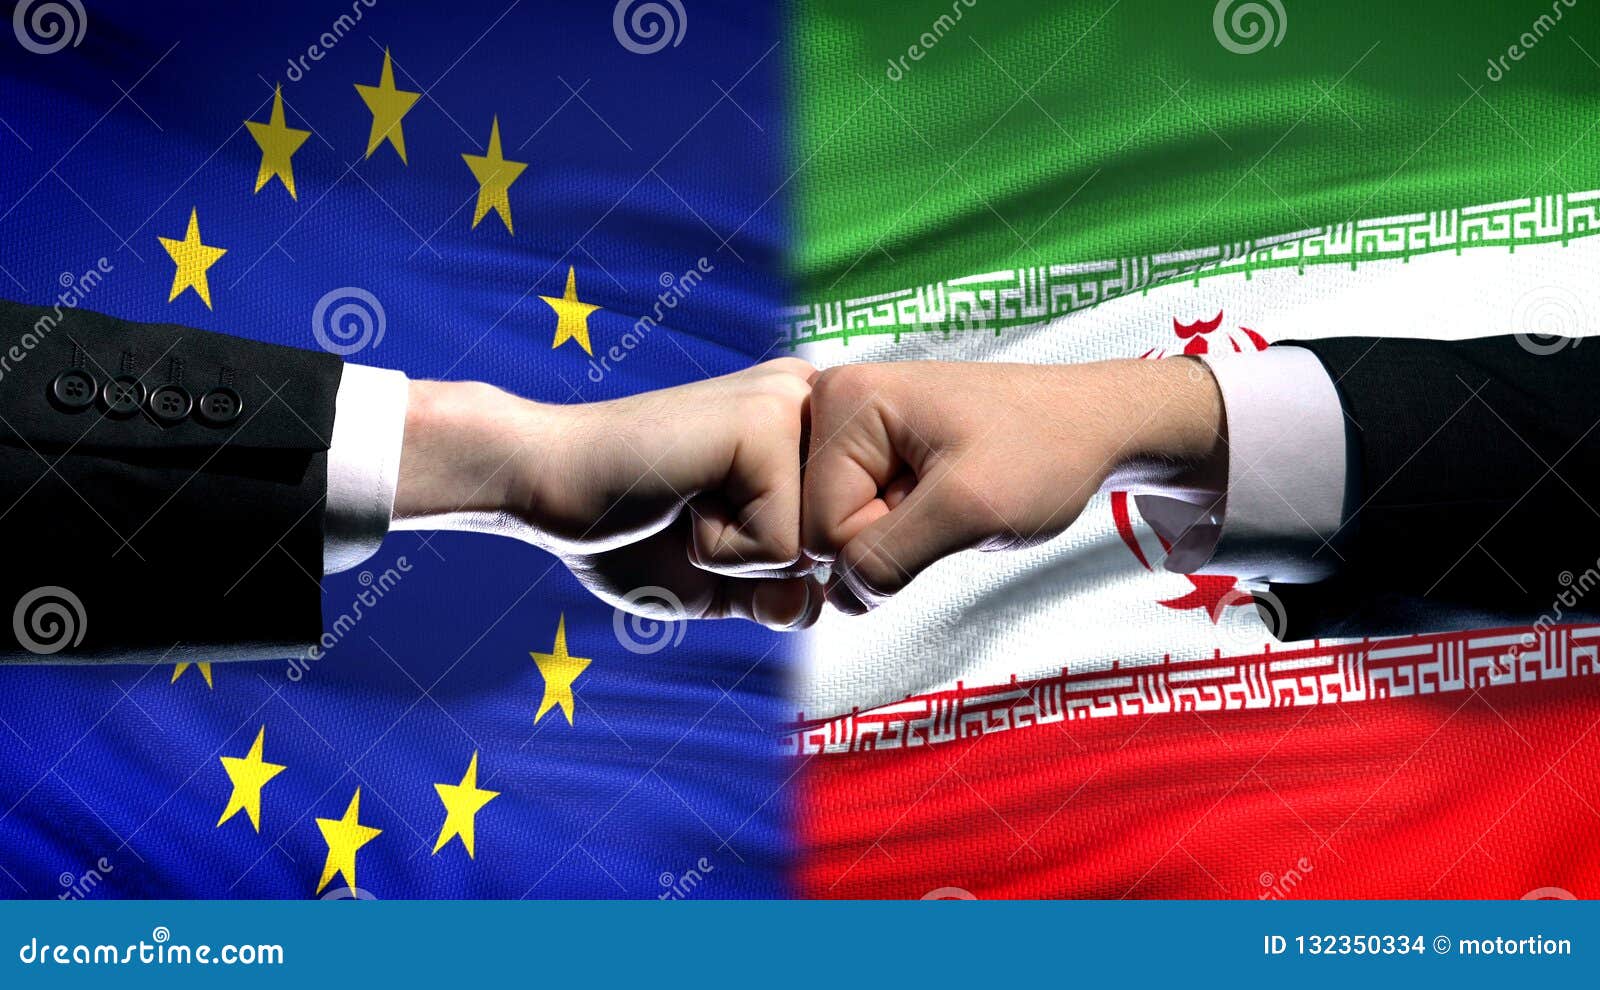 Eu Vs Iran Conflict International Relations Crisis Fists On Flag